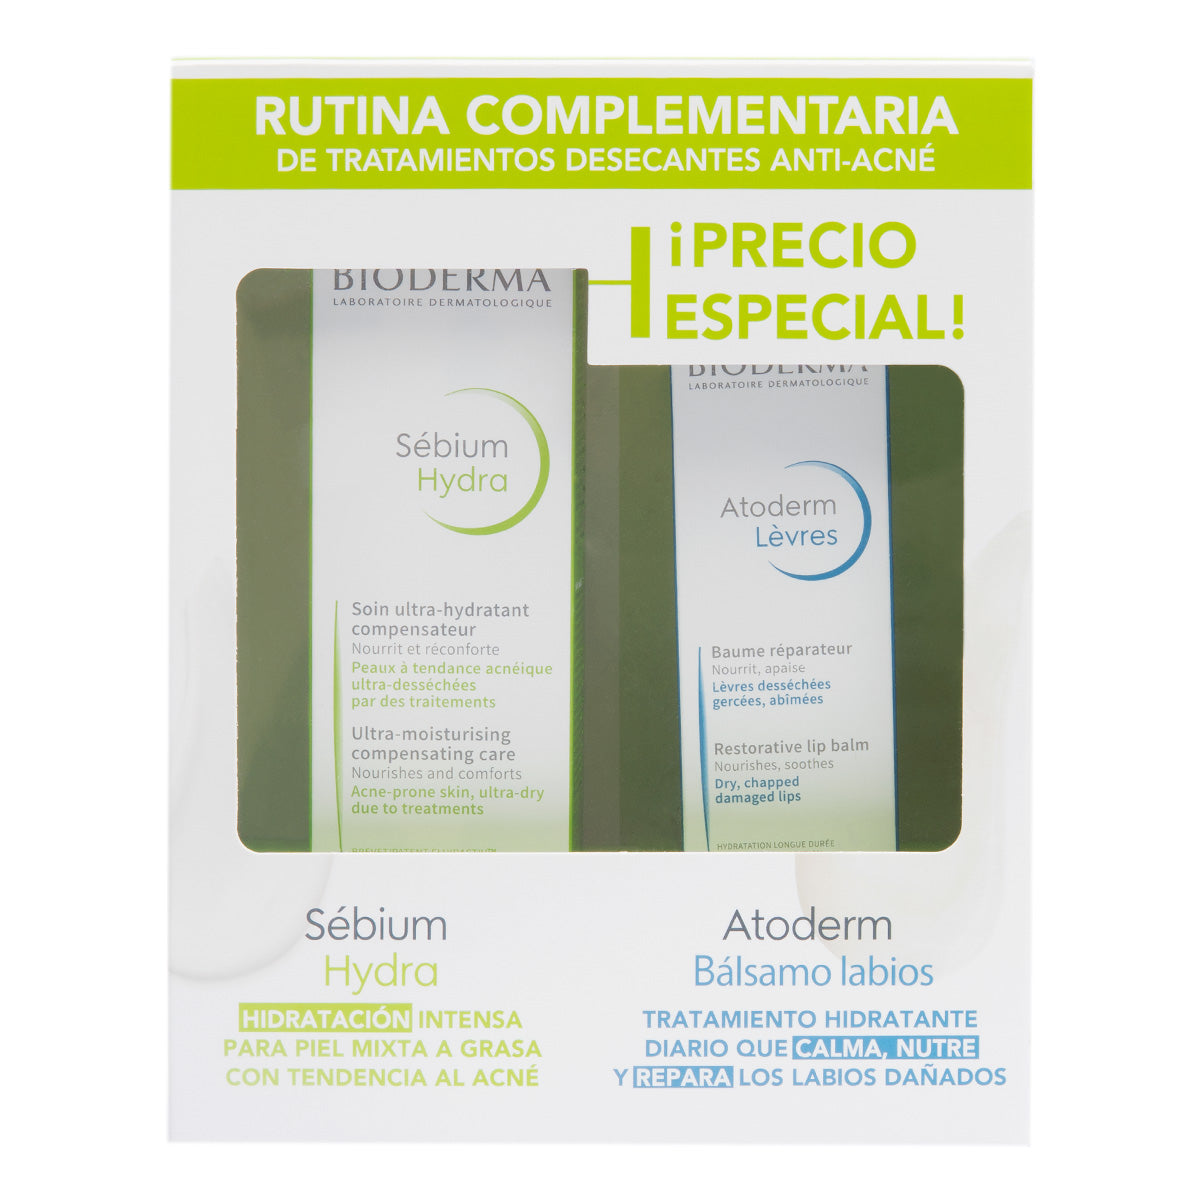 Bioderma Kit tratamiento anti-acne, Sebium Hydra, 40ml + Atoderm Labios, 15ml